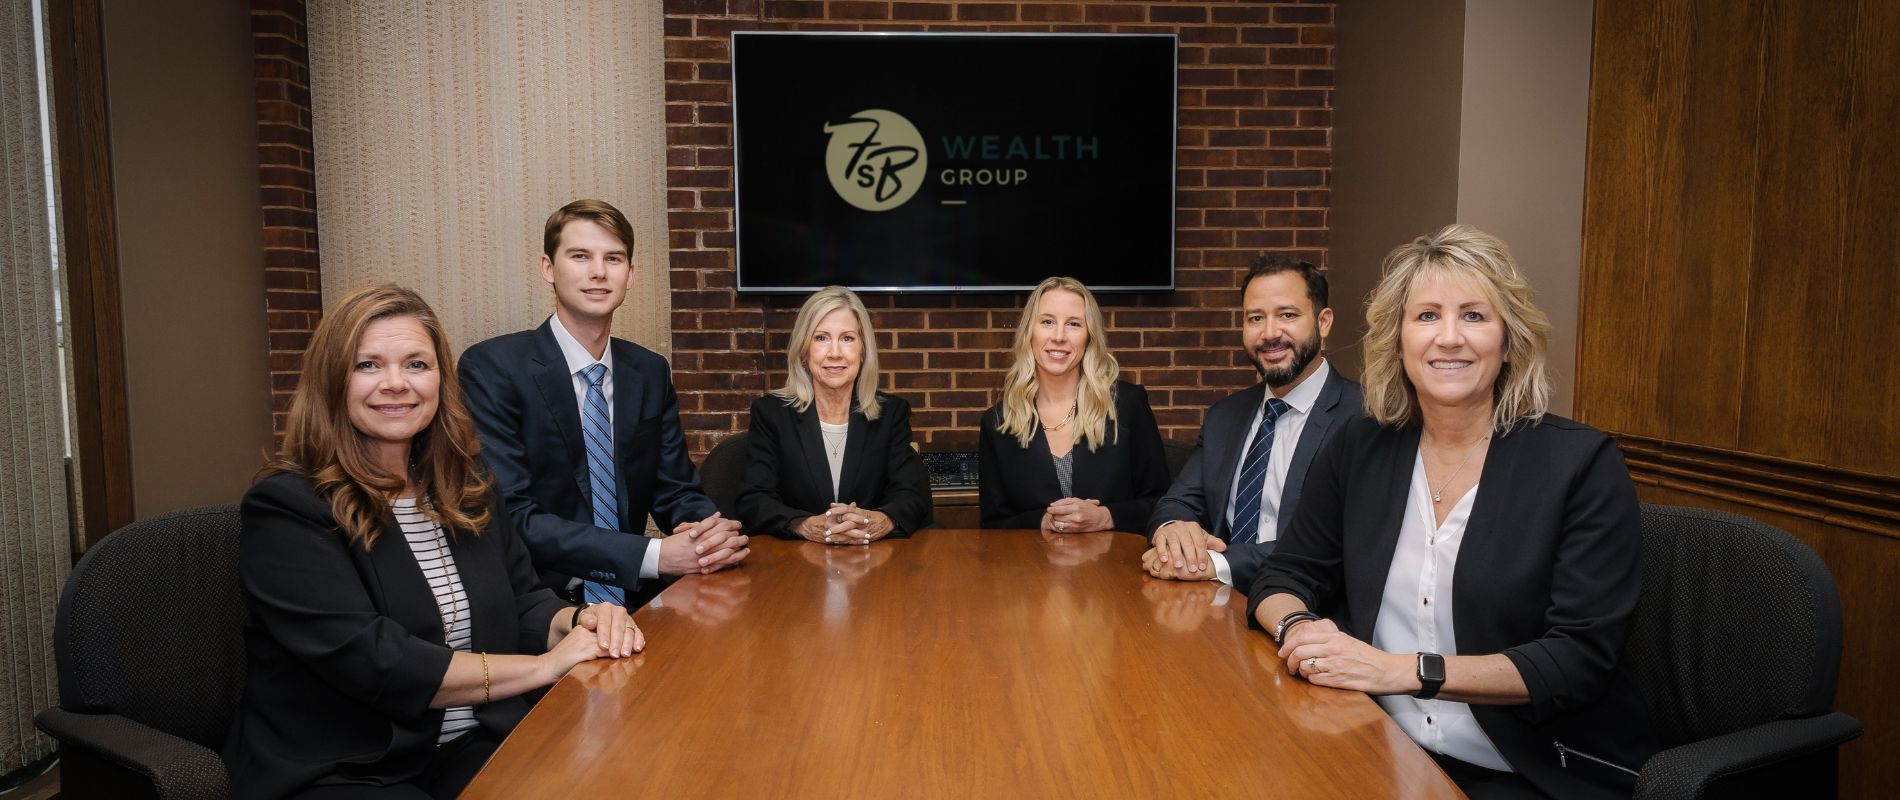 photo of fsb wealth group team